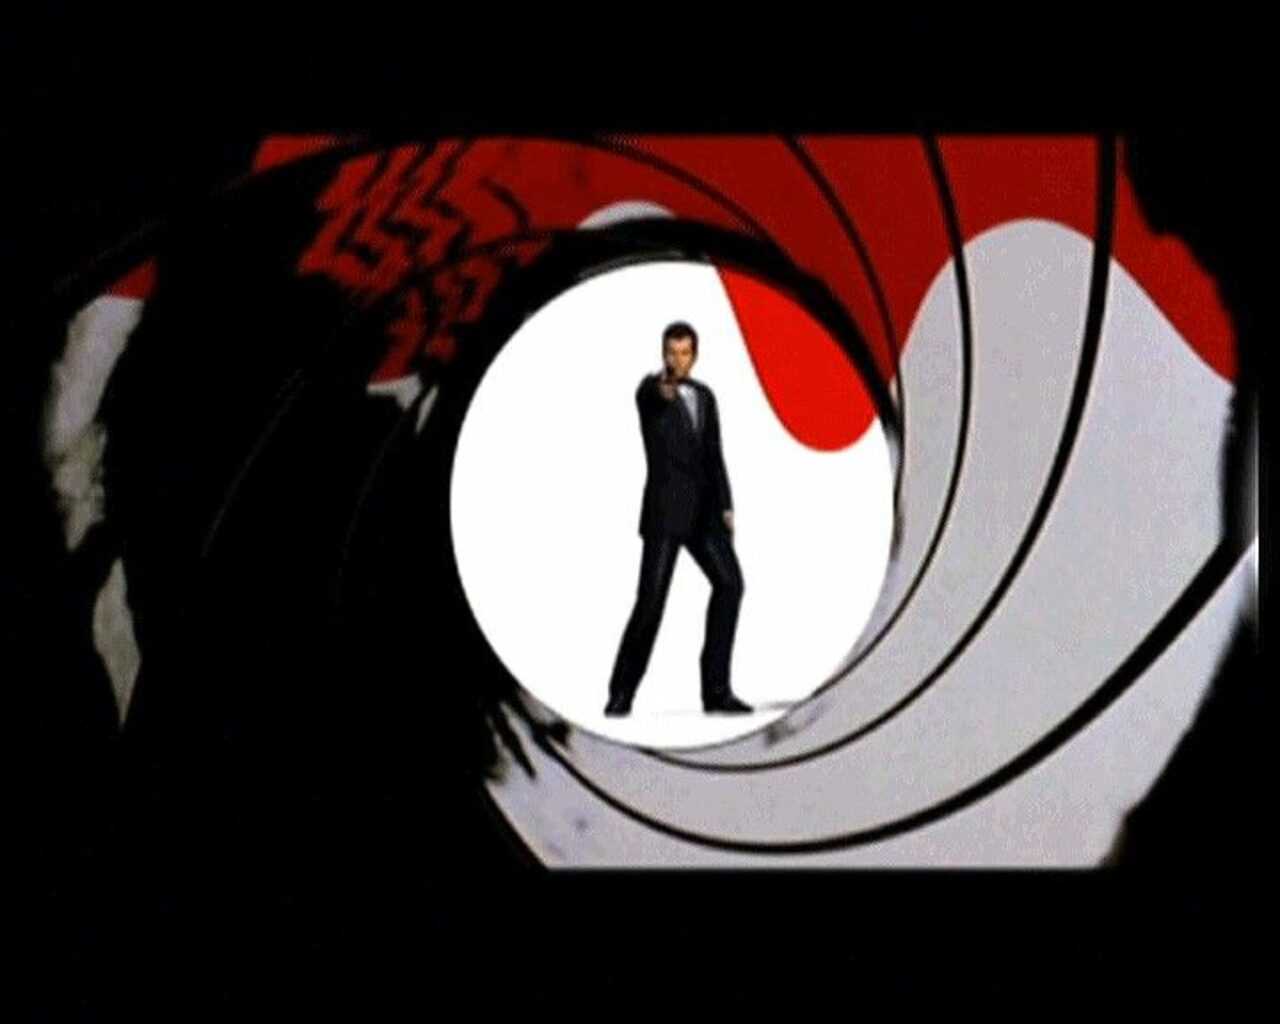 James Bond 007: Nightfire (2002) PlayStation 2